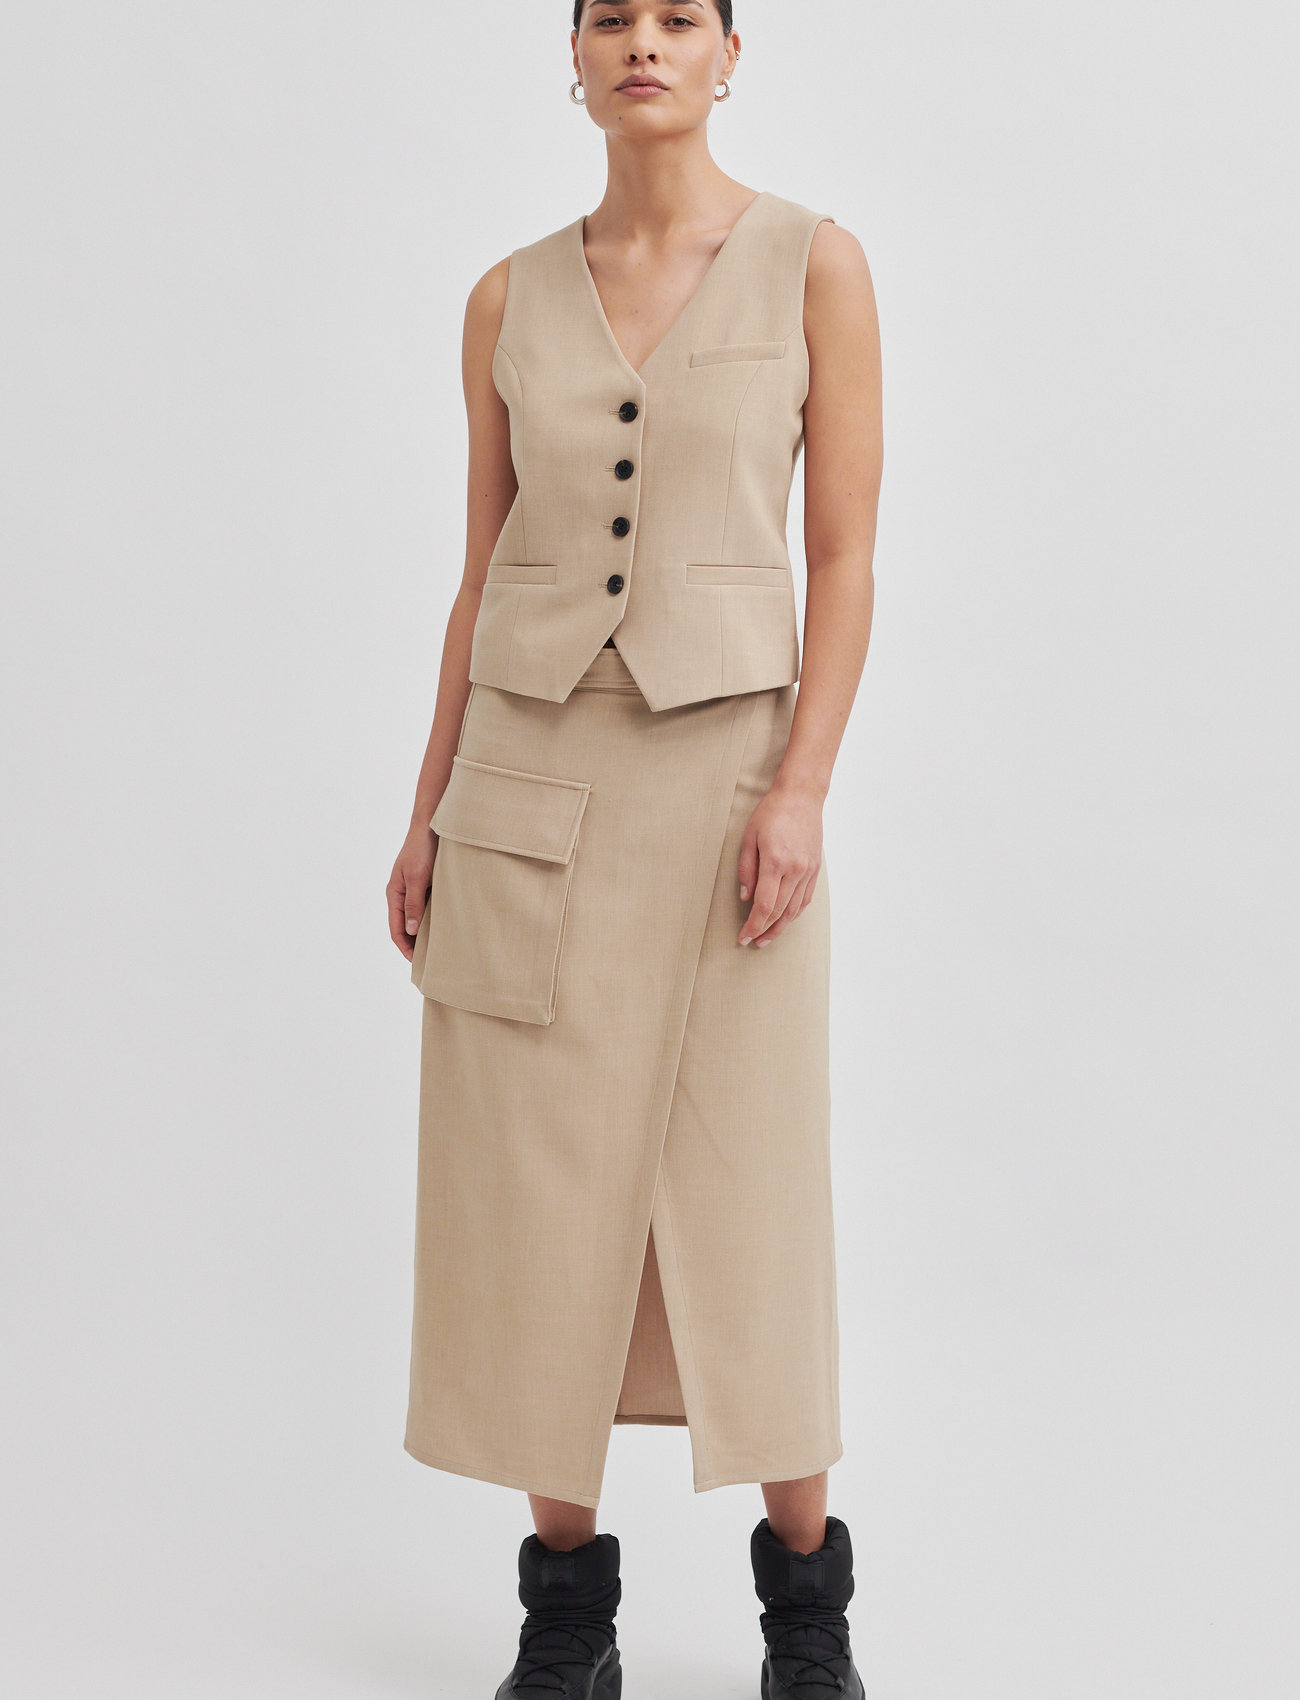 Second Female - Felice Skirt - festkläder till outletpriser - roasted cashew - 1